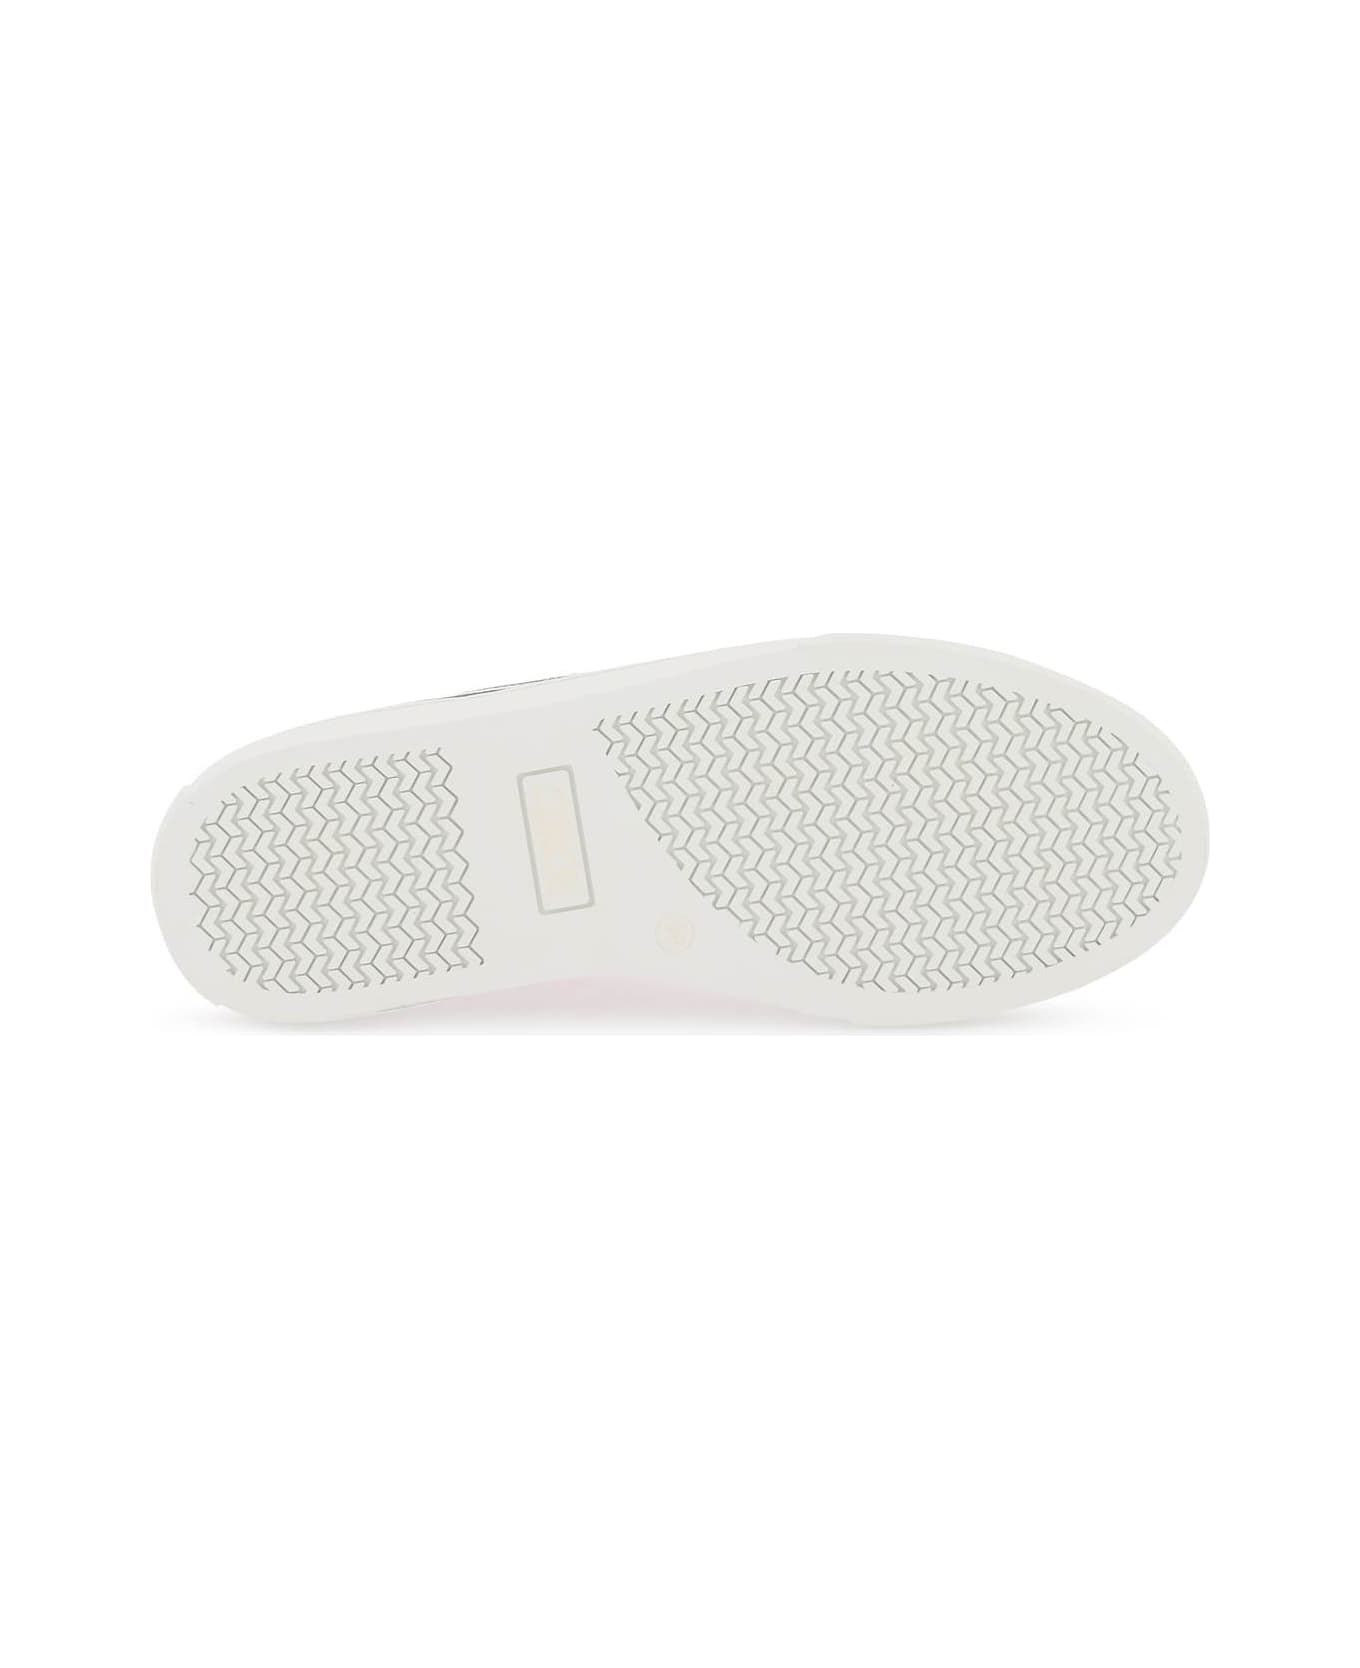 Vivienne Westwood Plimsoll Low Top 2.0 Sneakers - OPTIC WHITE (White) スニーカー